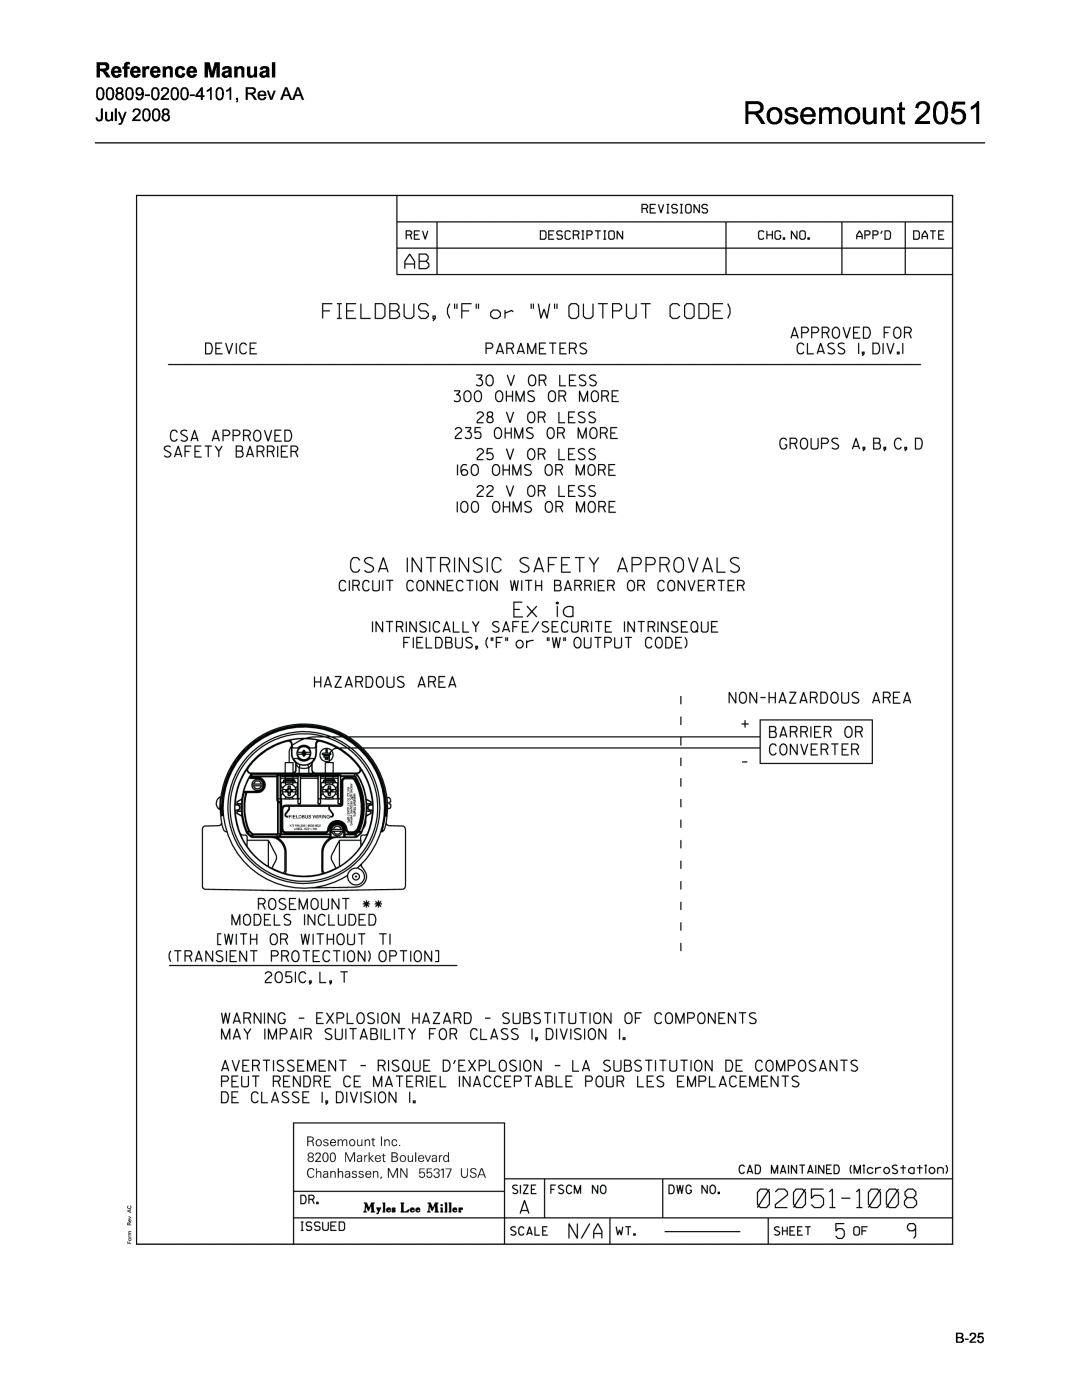 Emerson Process Management 2051 manual Rosemount, Reference Manual, B-25 